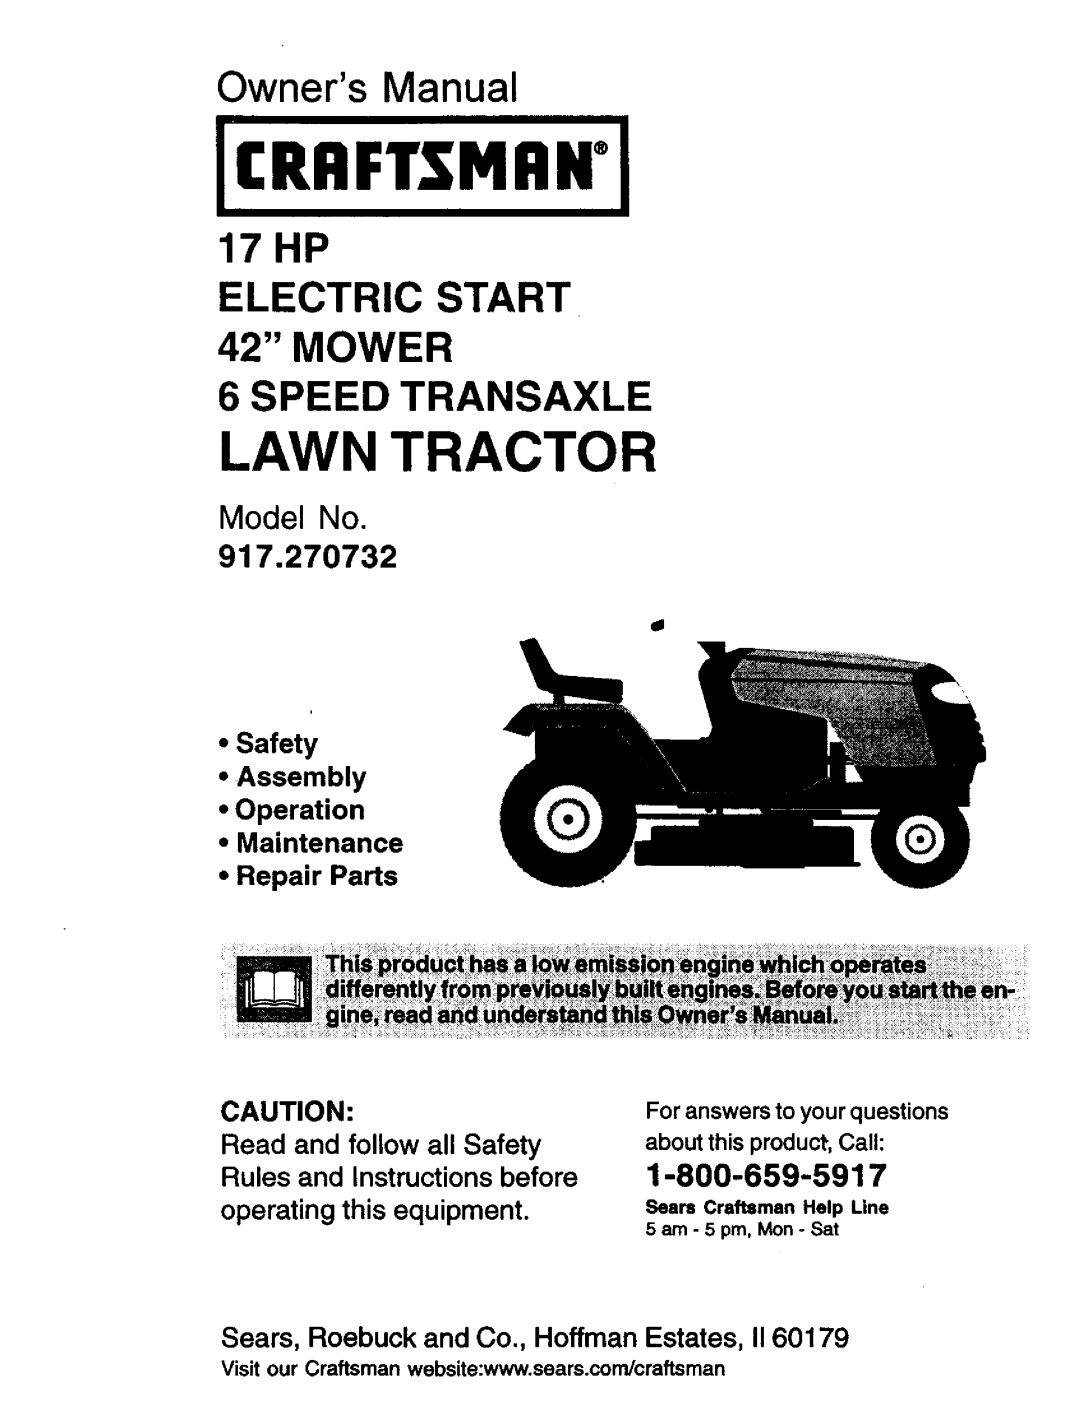 Craftsman 917.270732 owner manual 1-800-659-5917, •Safety •Assembly •Operation •Maintenance, •Repair Parts, Call, Model No 